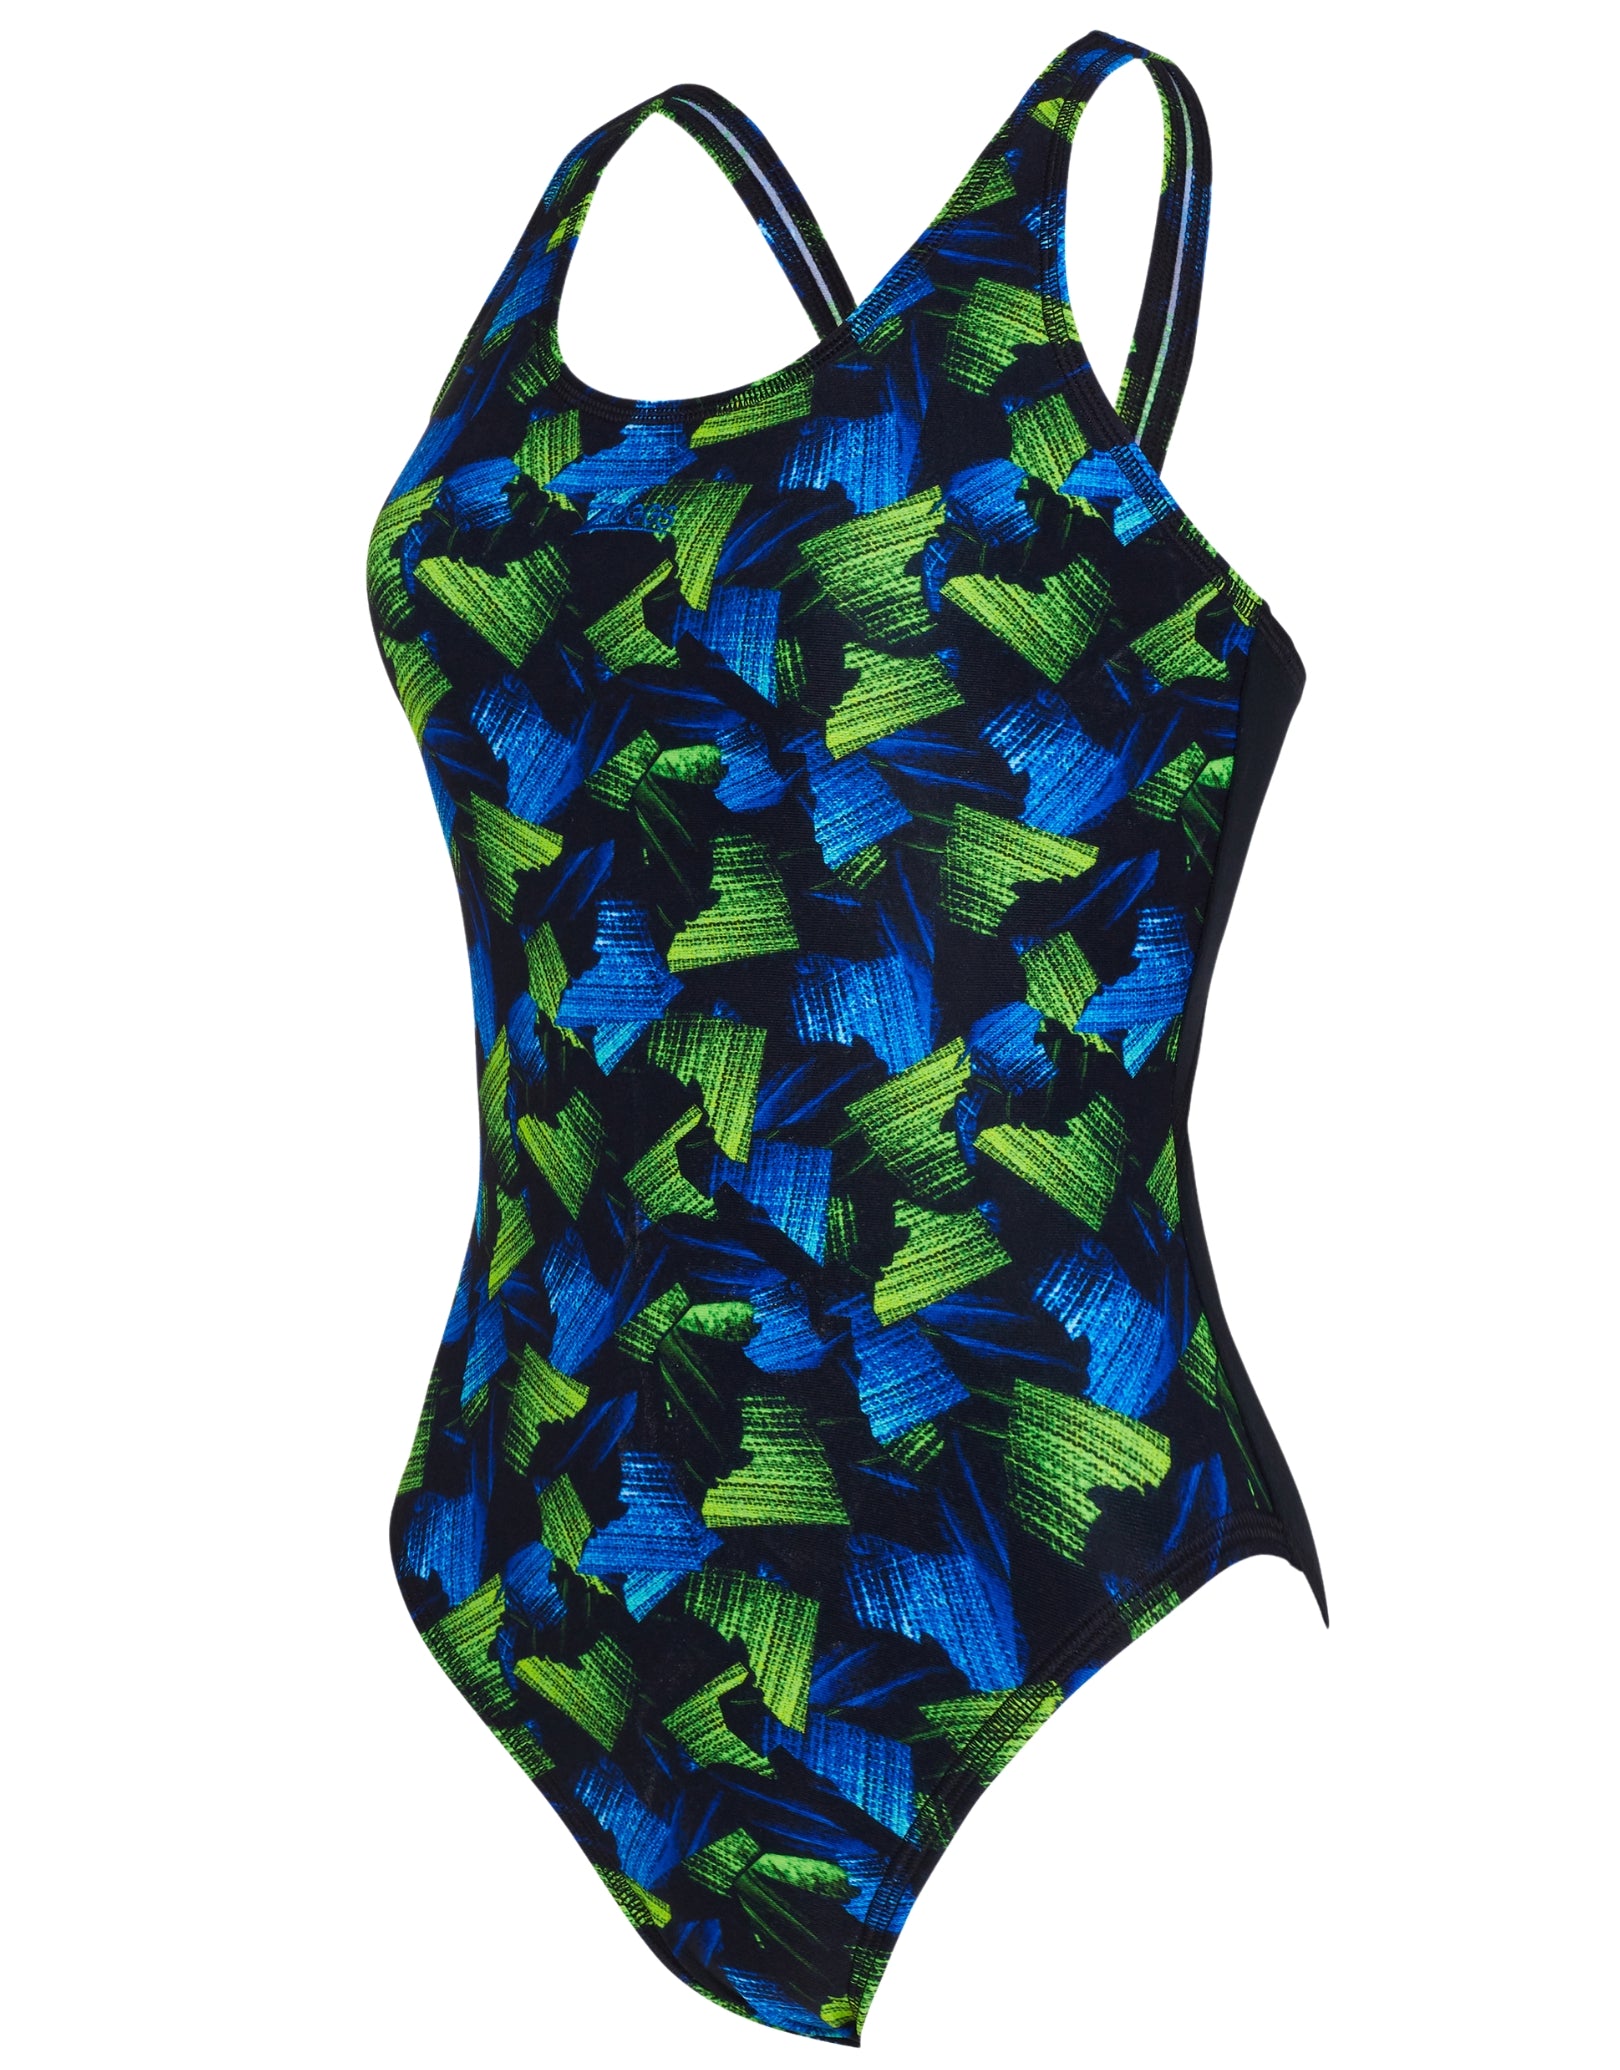 Zoggs Swell Masterback Swimsuit - Black/Green| Simply Swim | Simply Swim UK